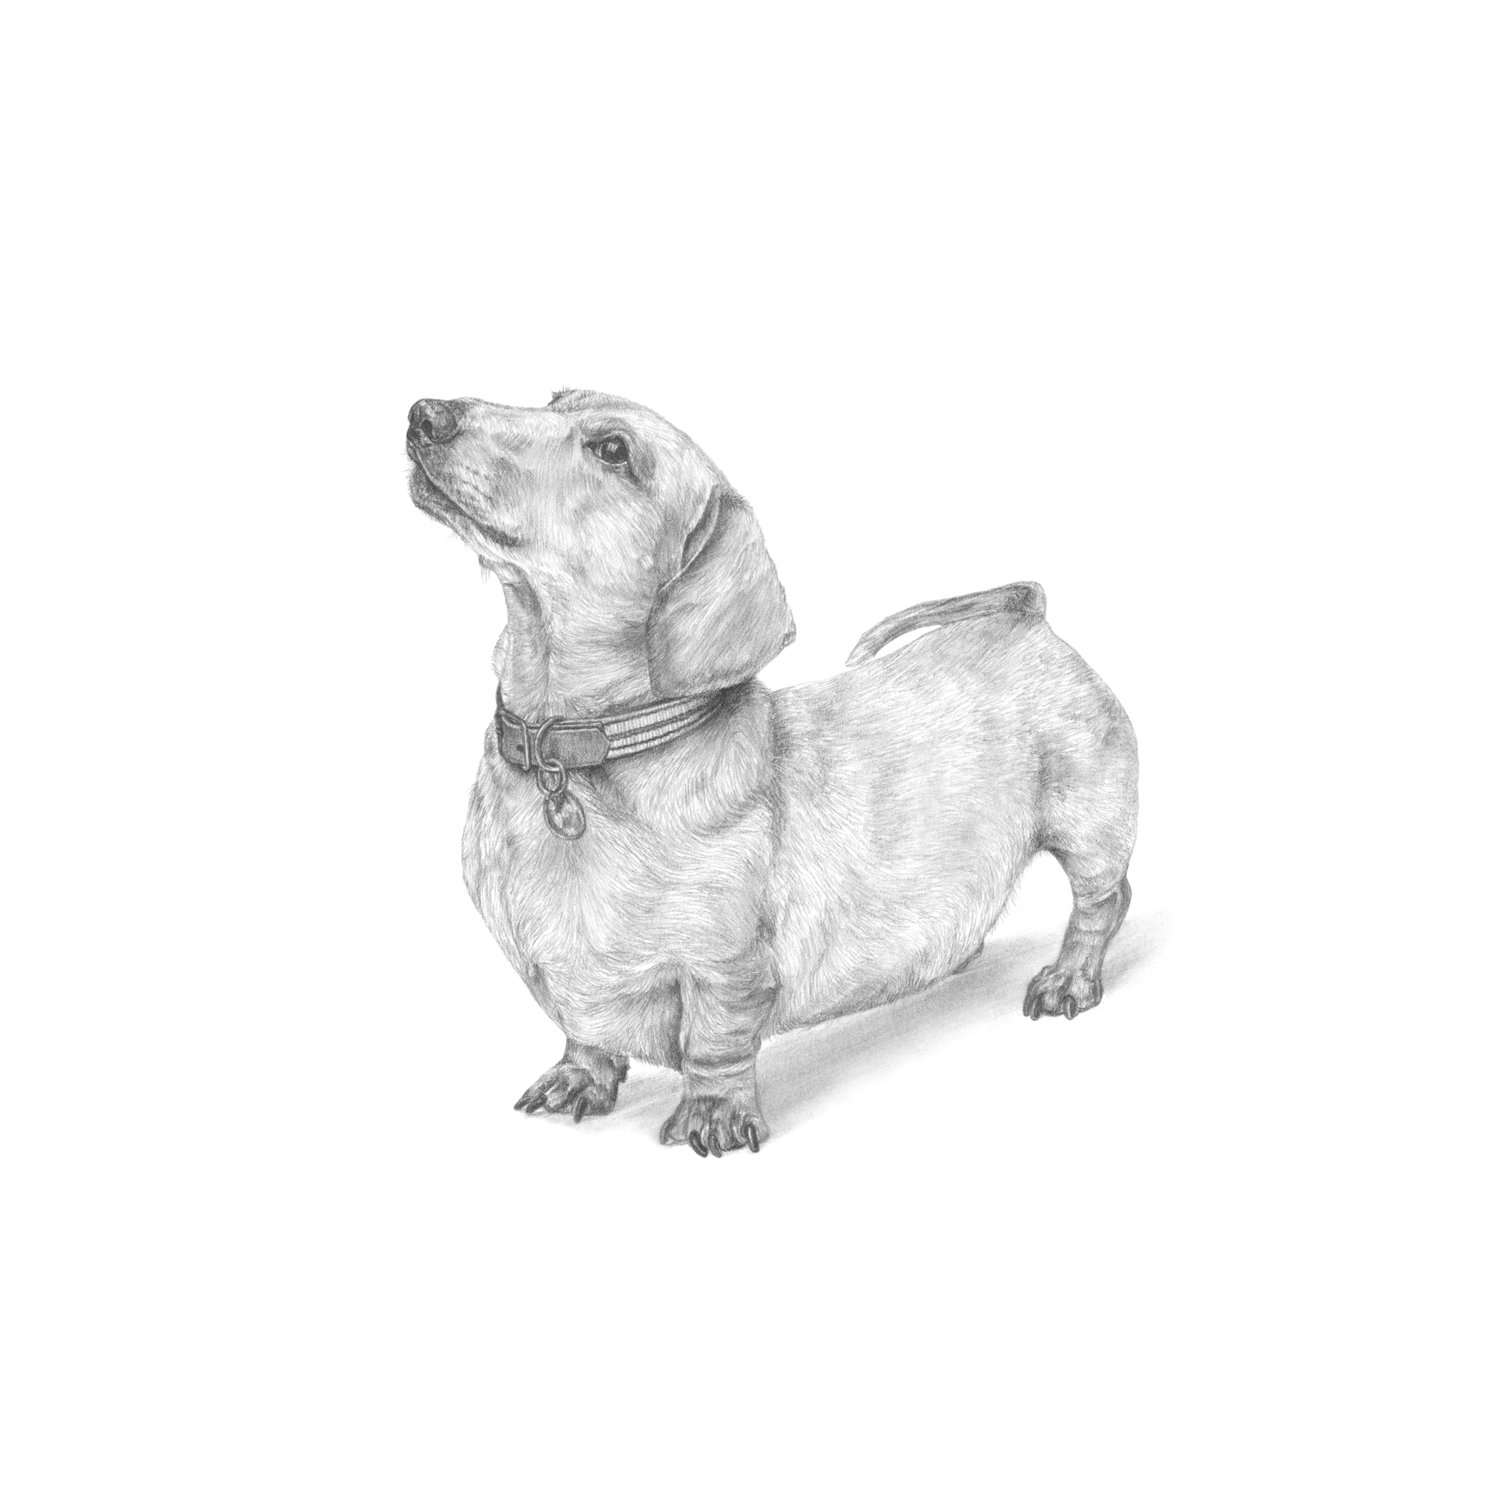 jo-murphy-commission-portrait-dog-pretzel.jpg